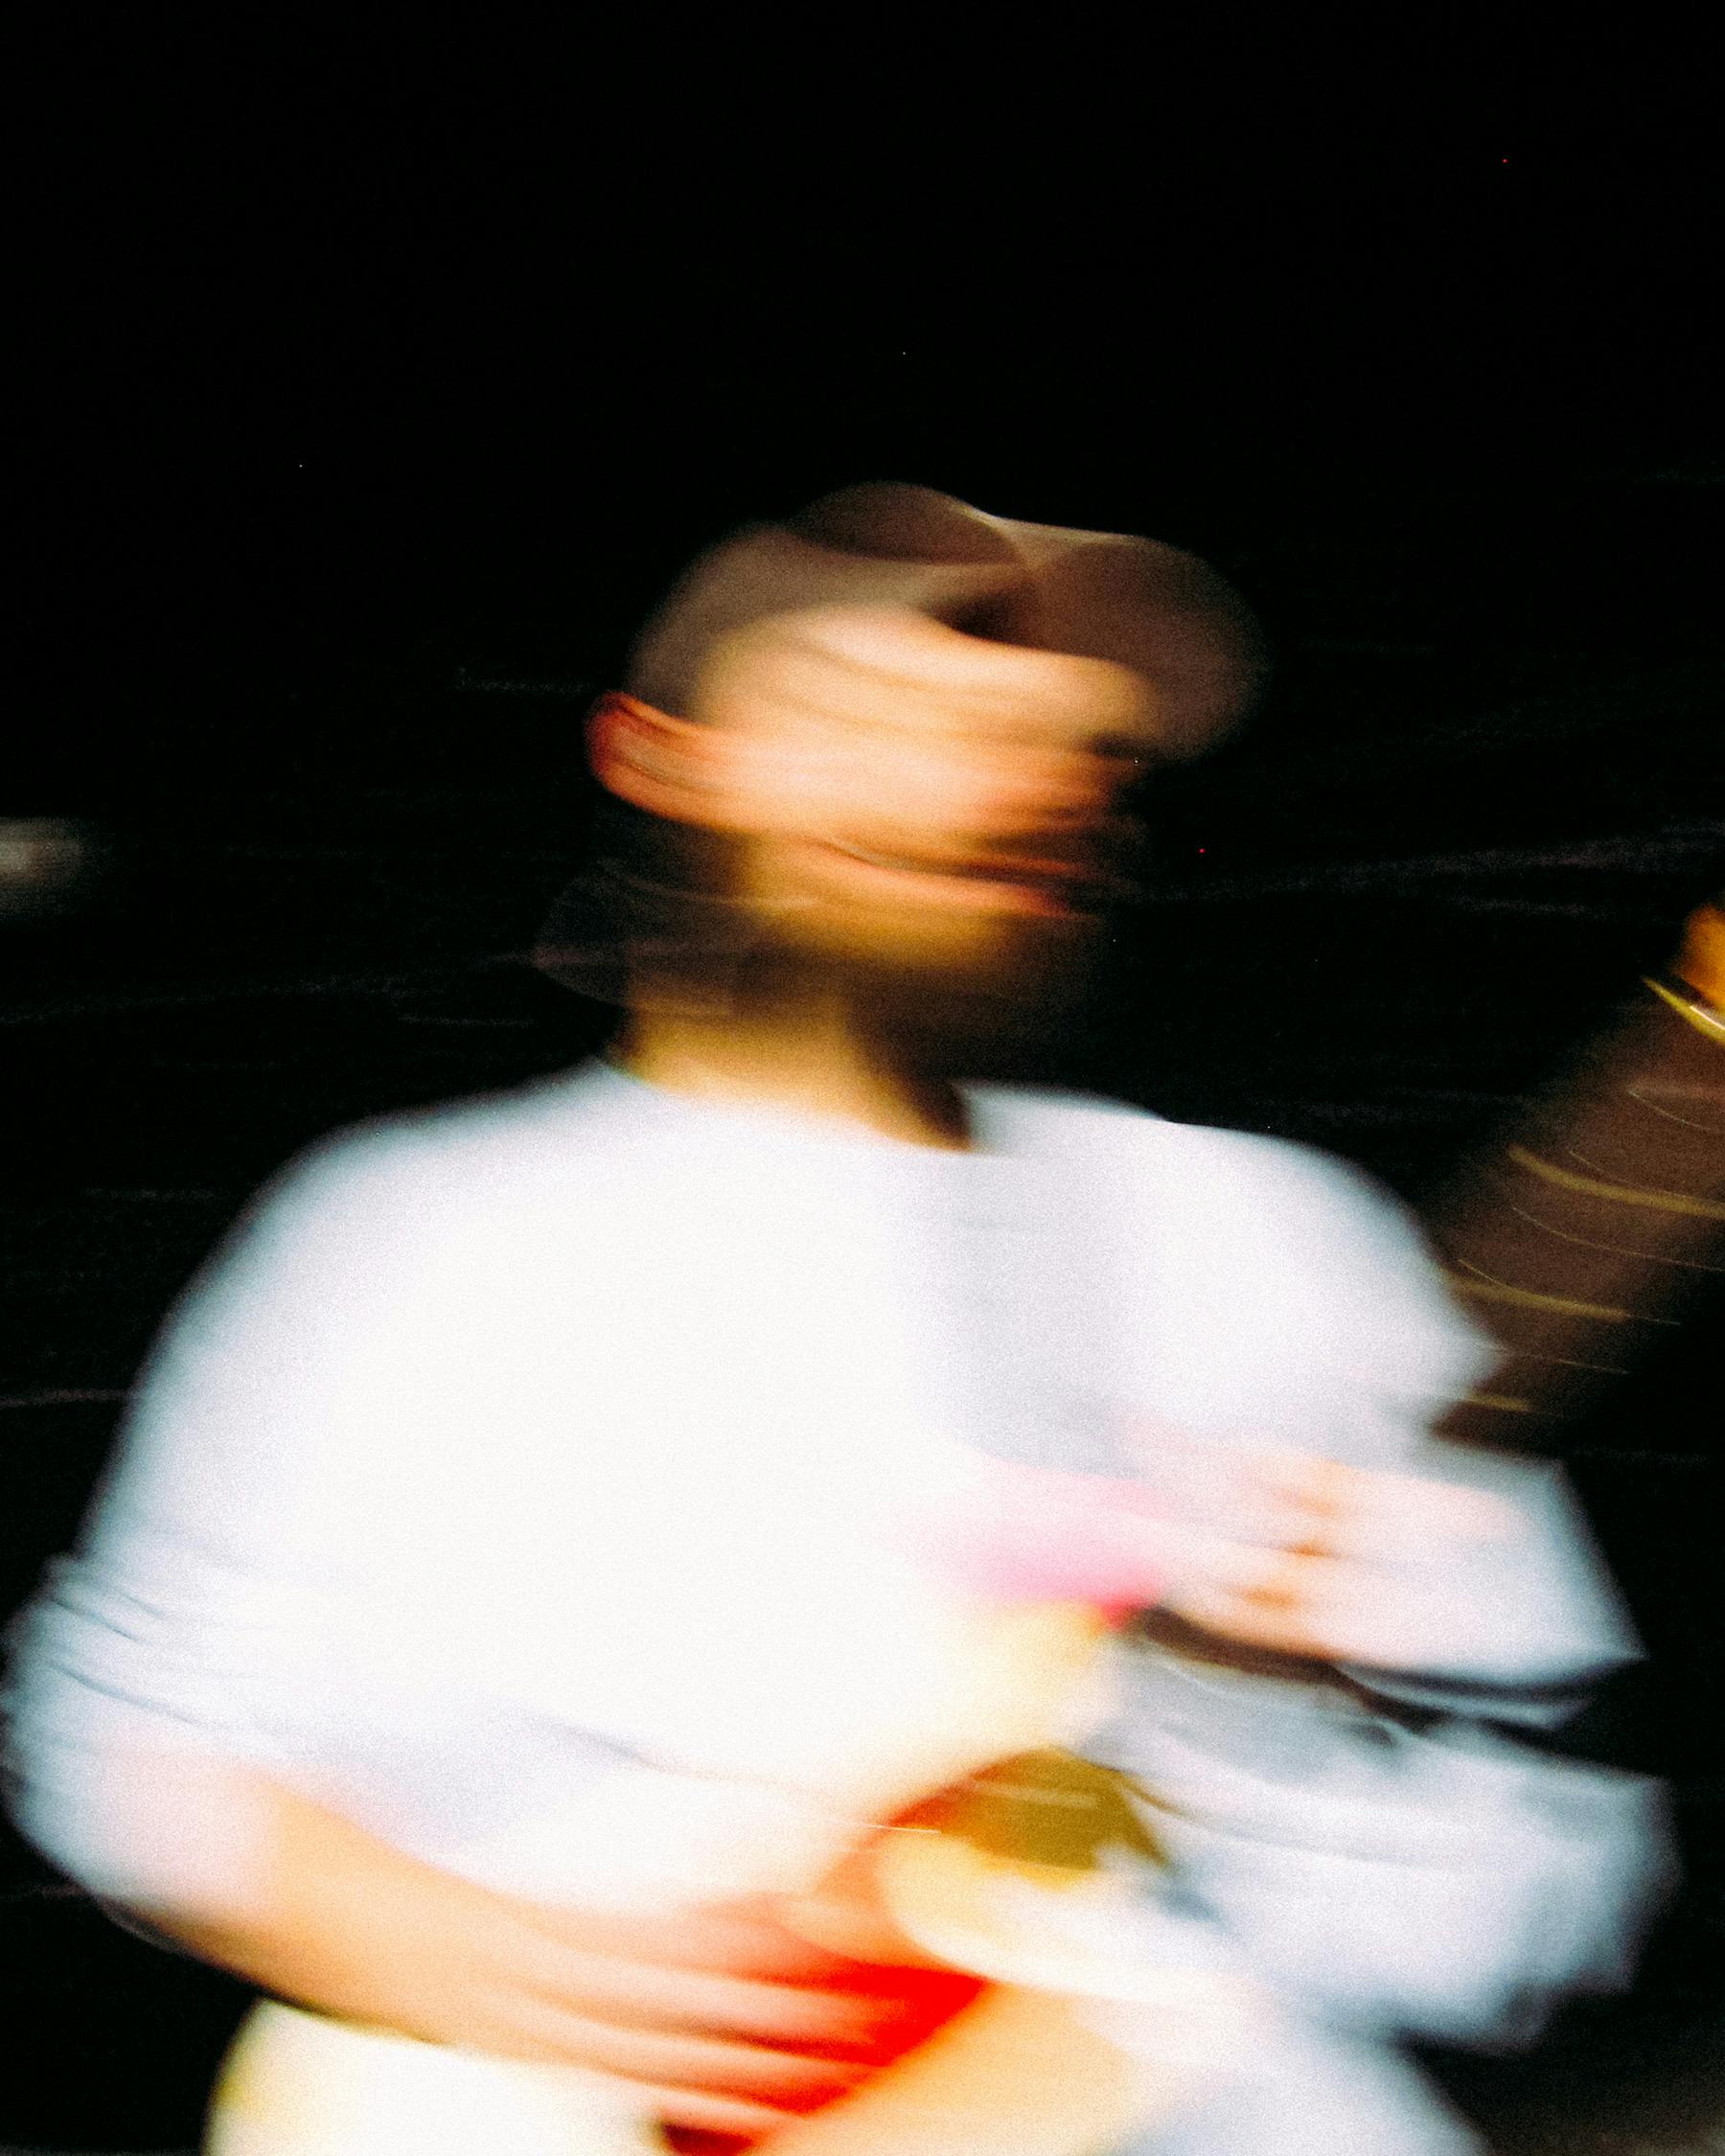 san holo shredding guitar all blurred